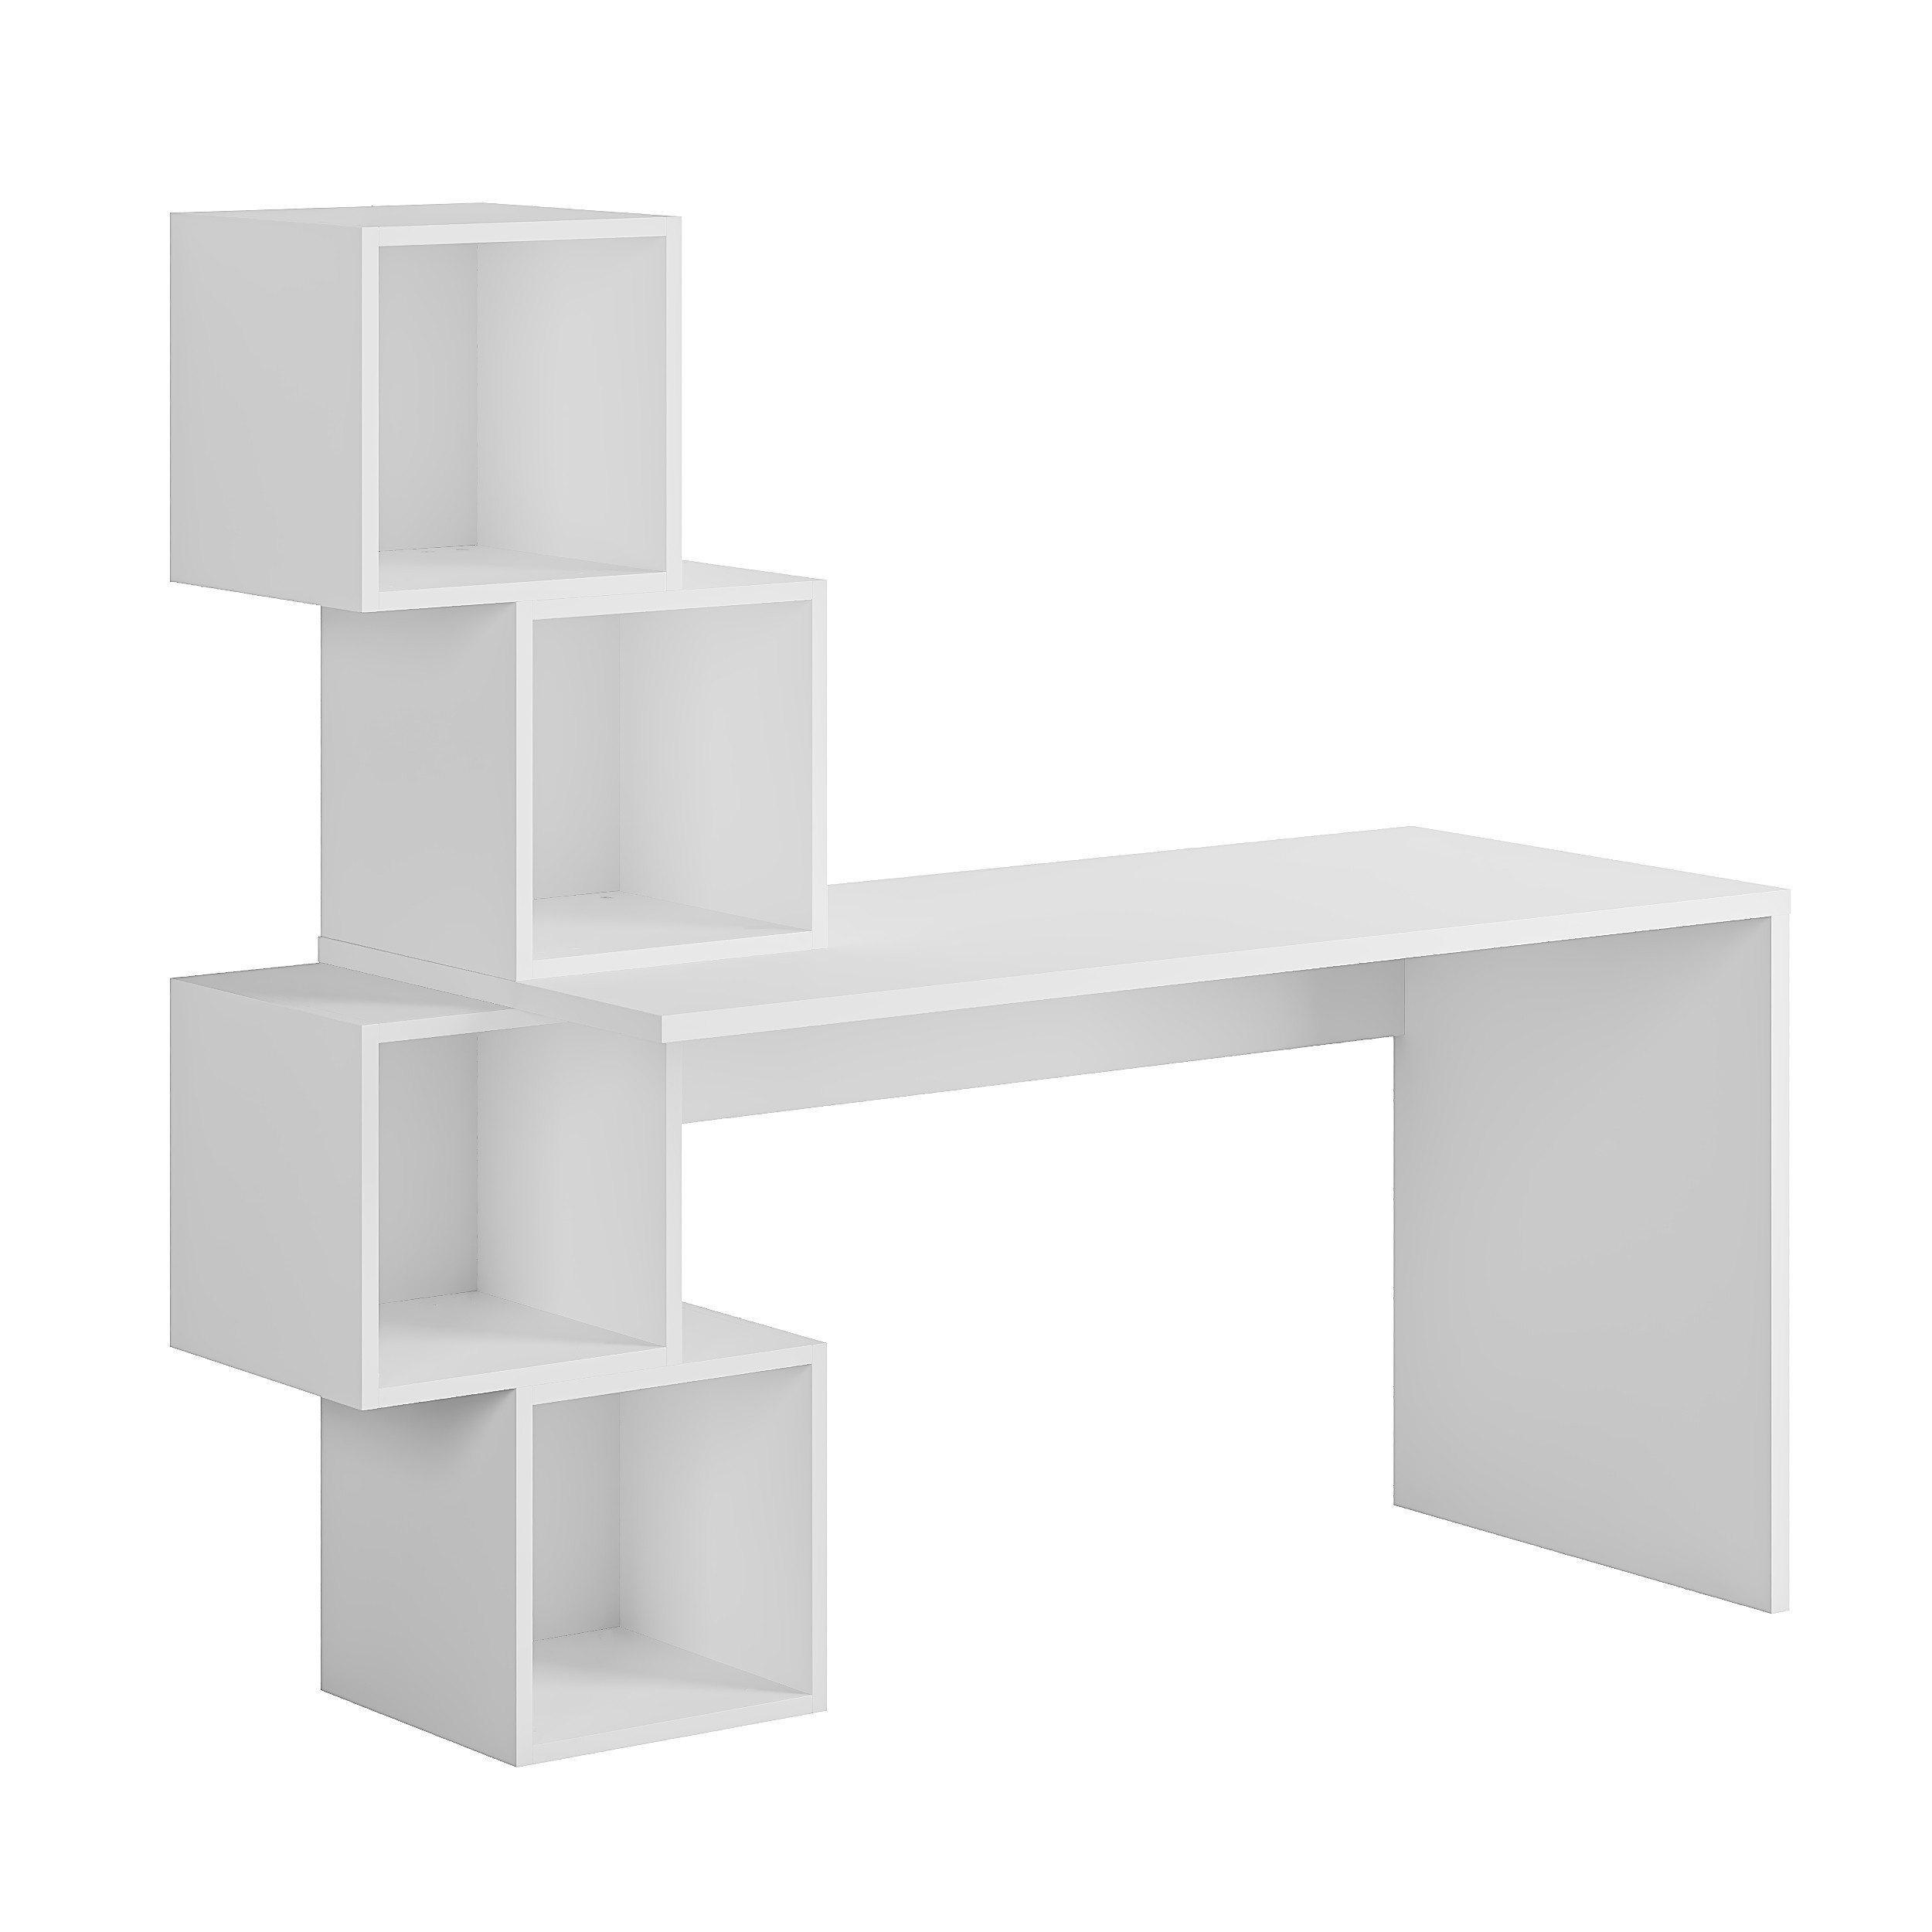 Balance Working Table White - White